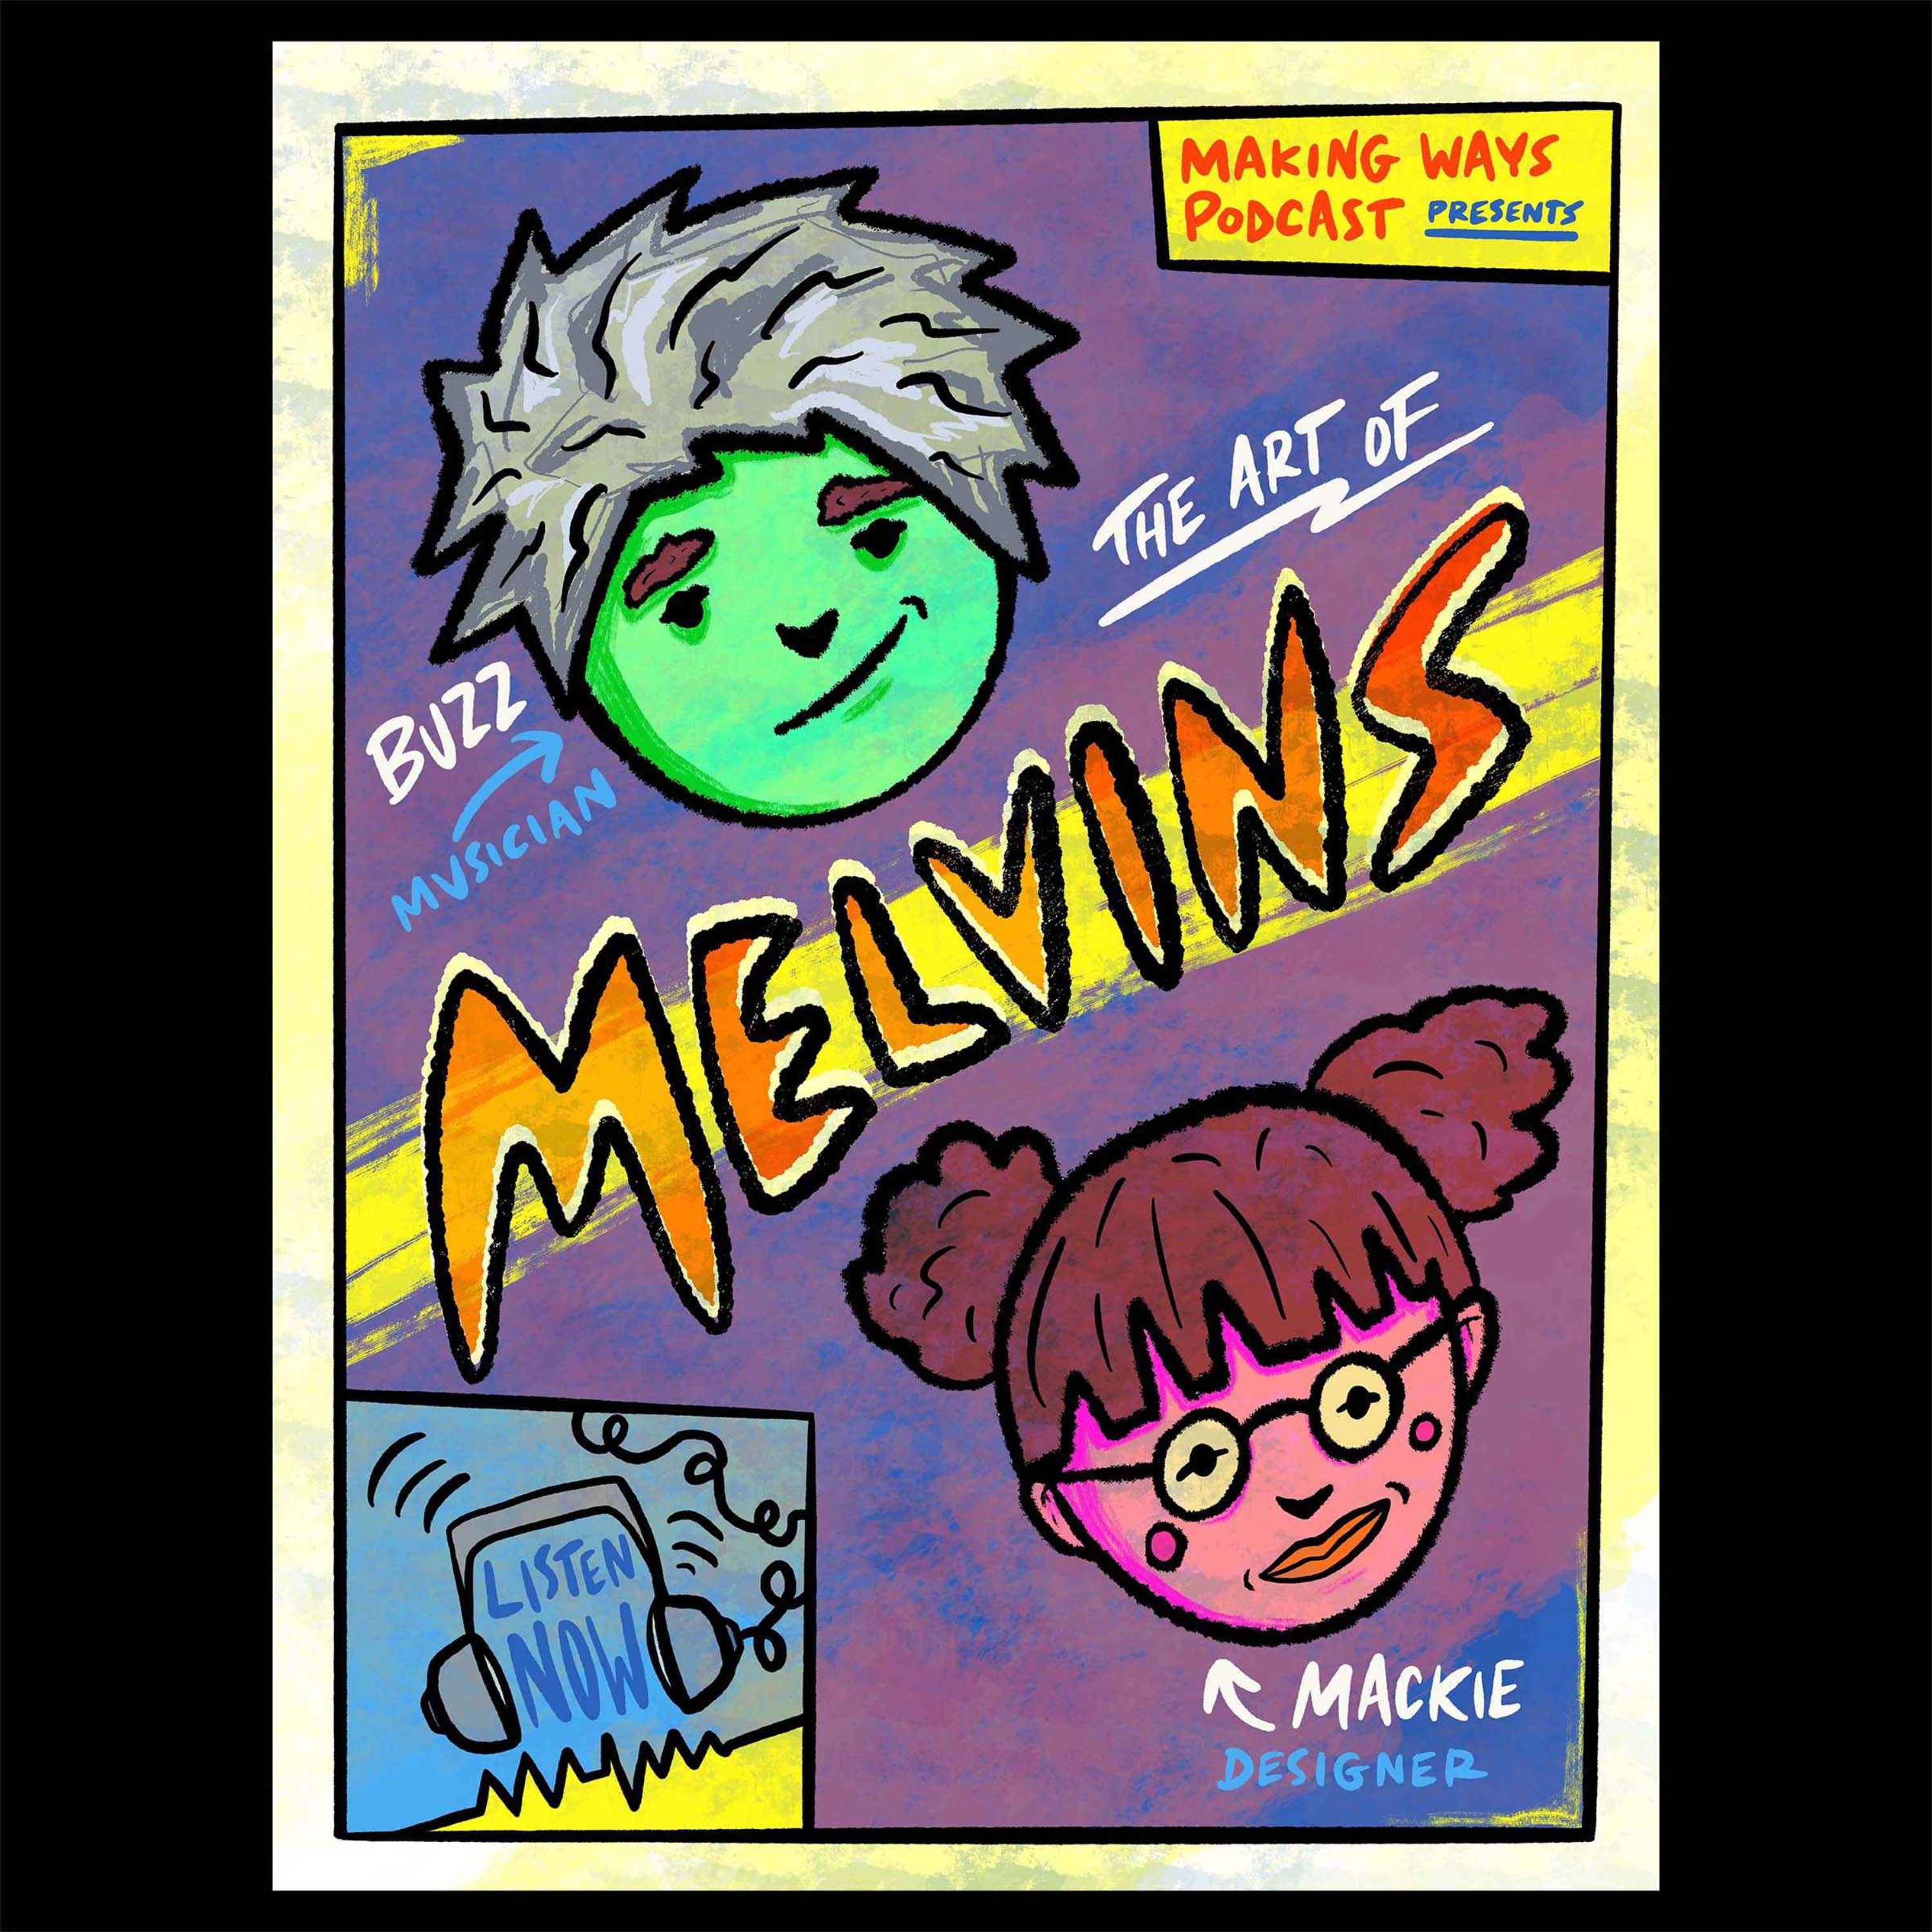 The Art of Melvins with Buzz Osborne and Mackie Osborne